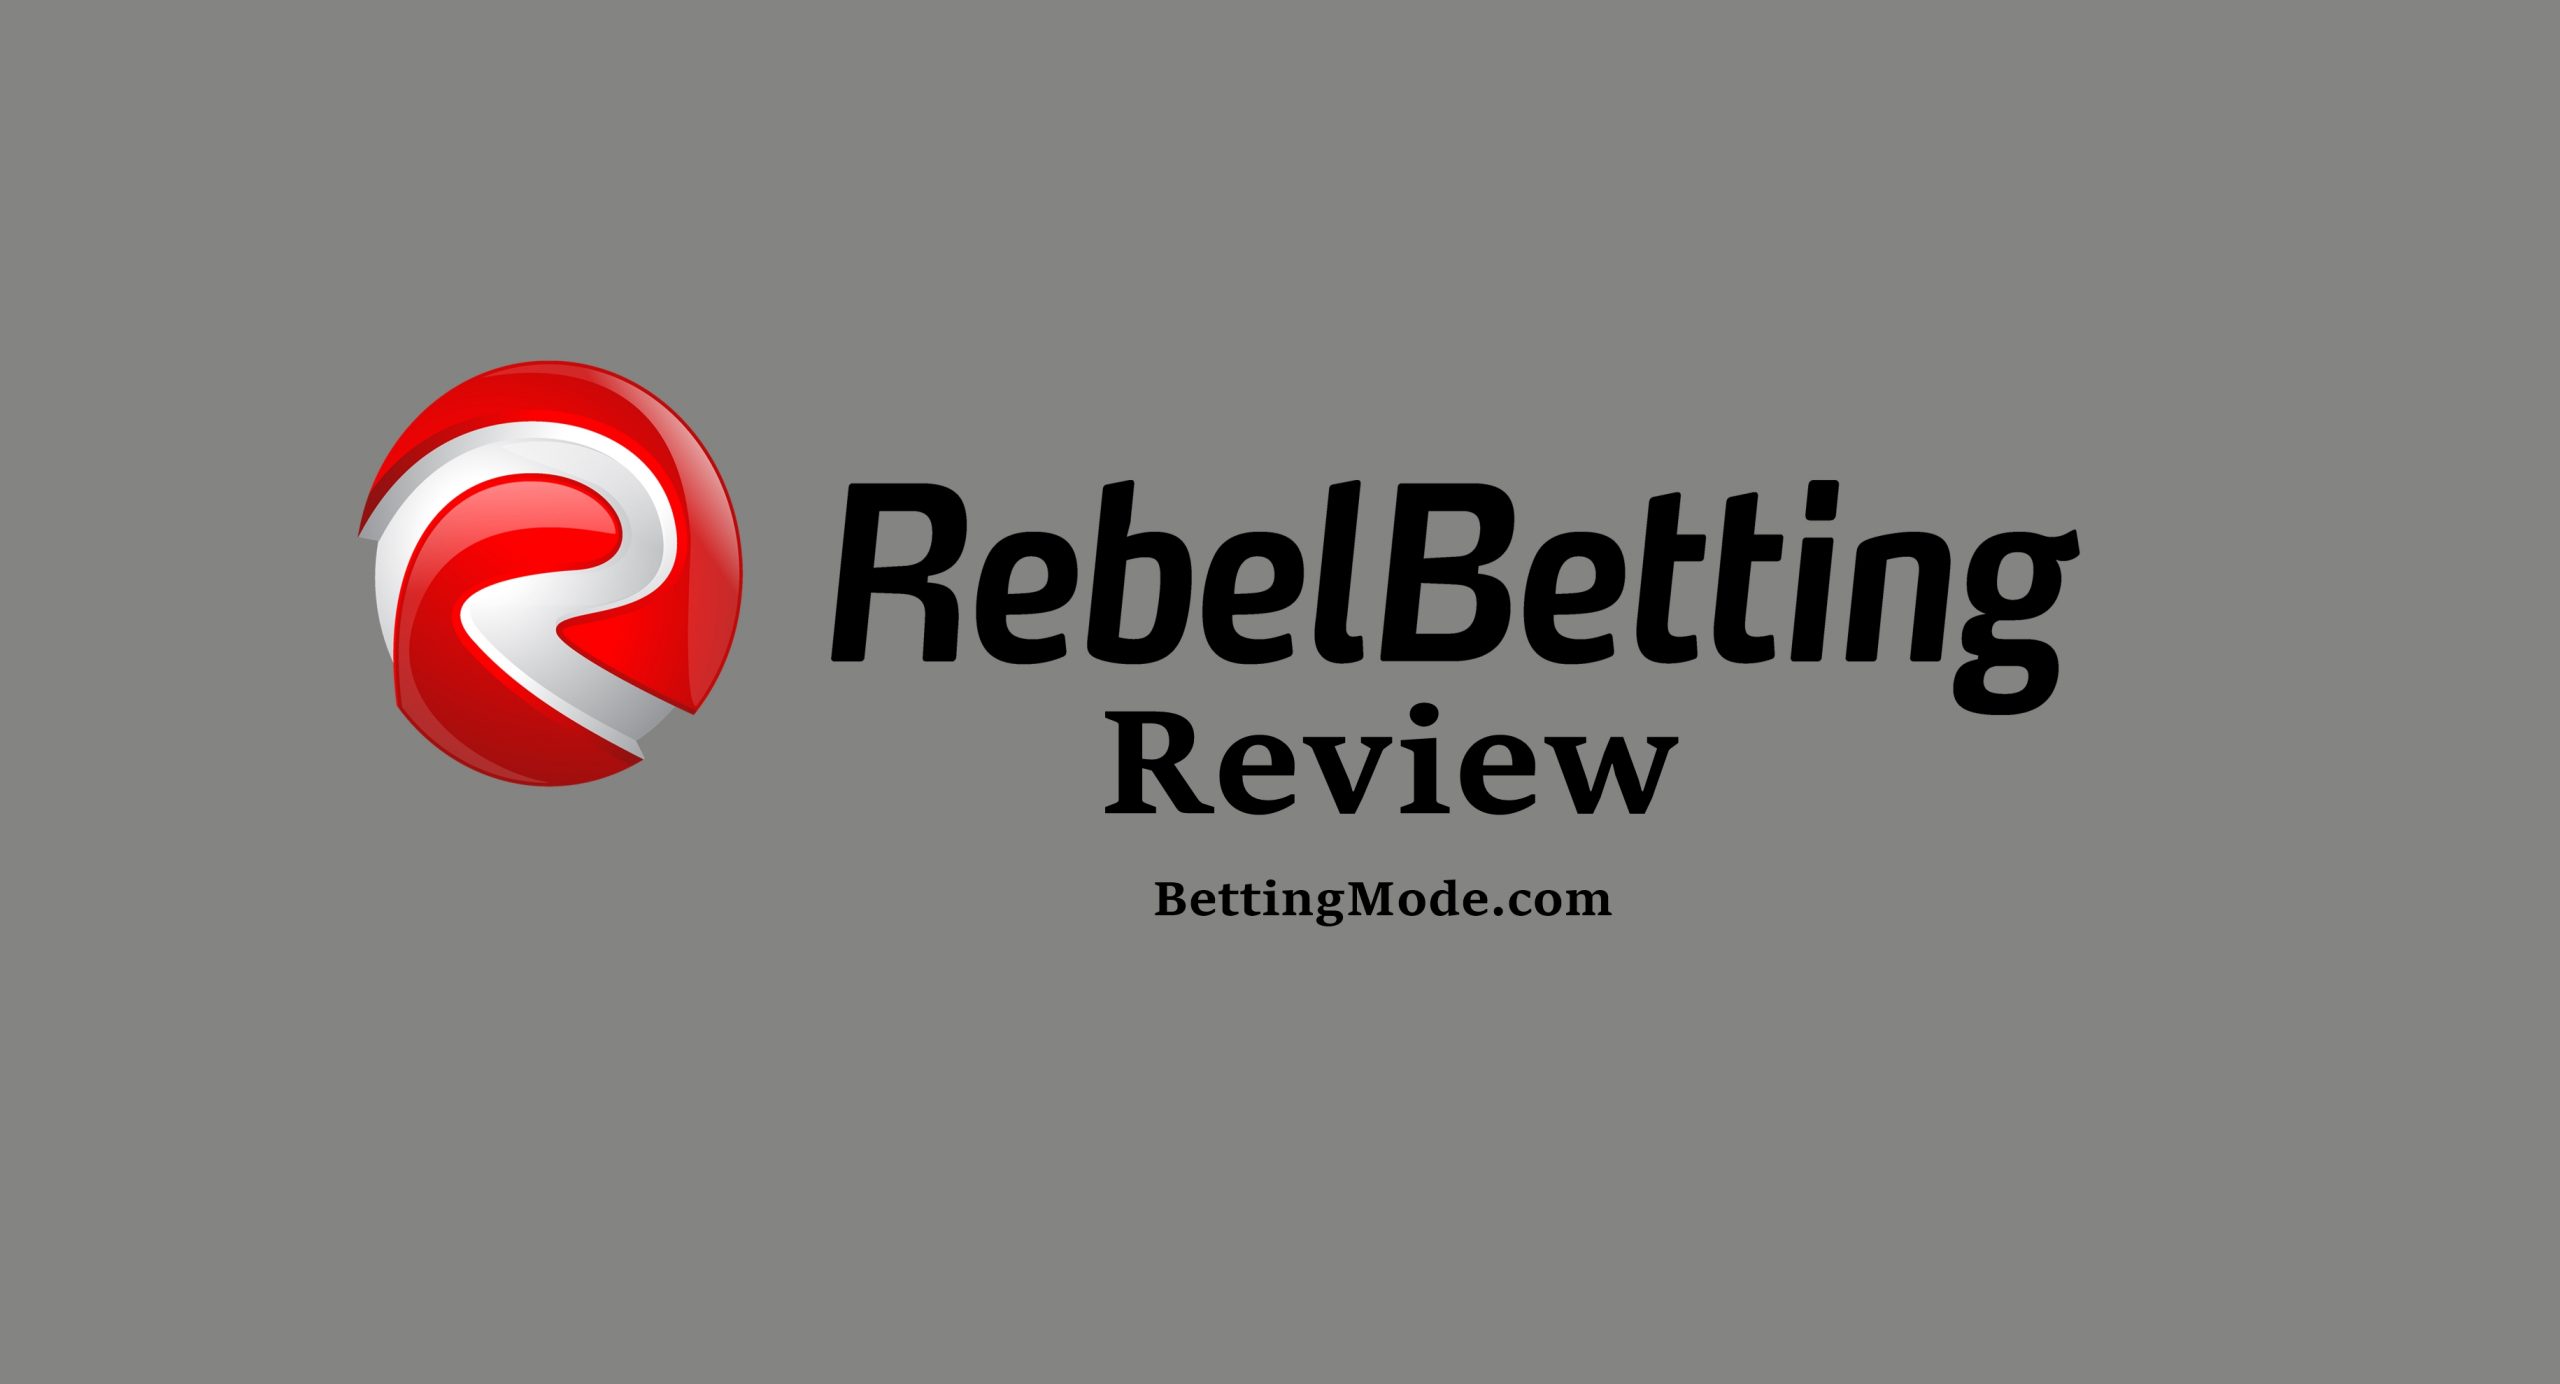 rebelbetting software review, rebel betting review, rebelbetting review